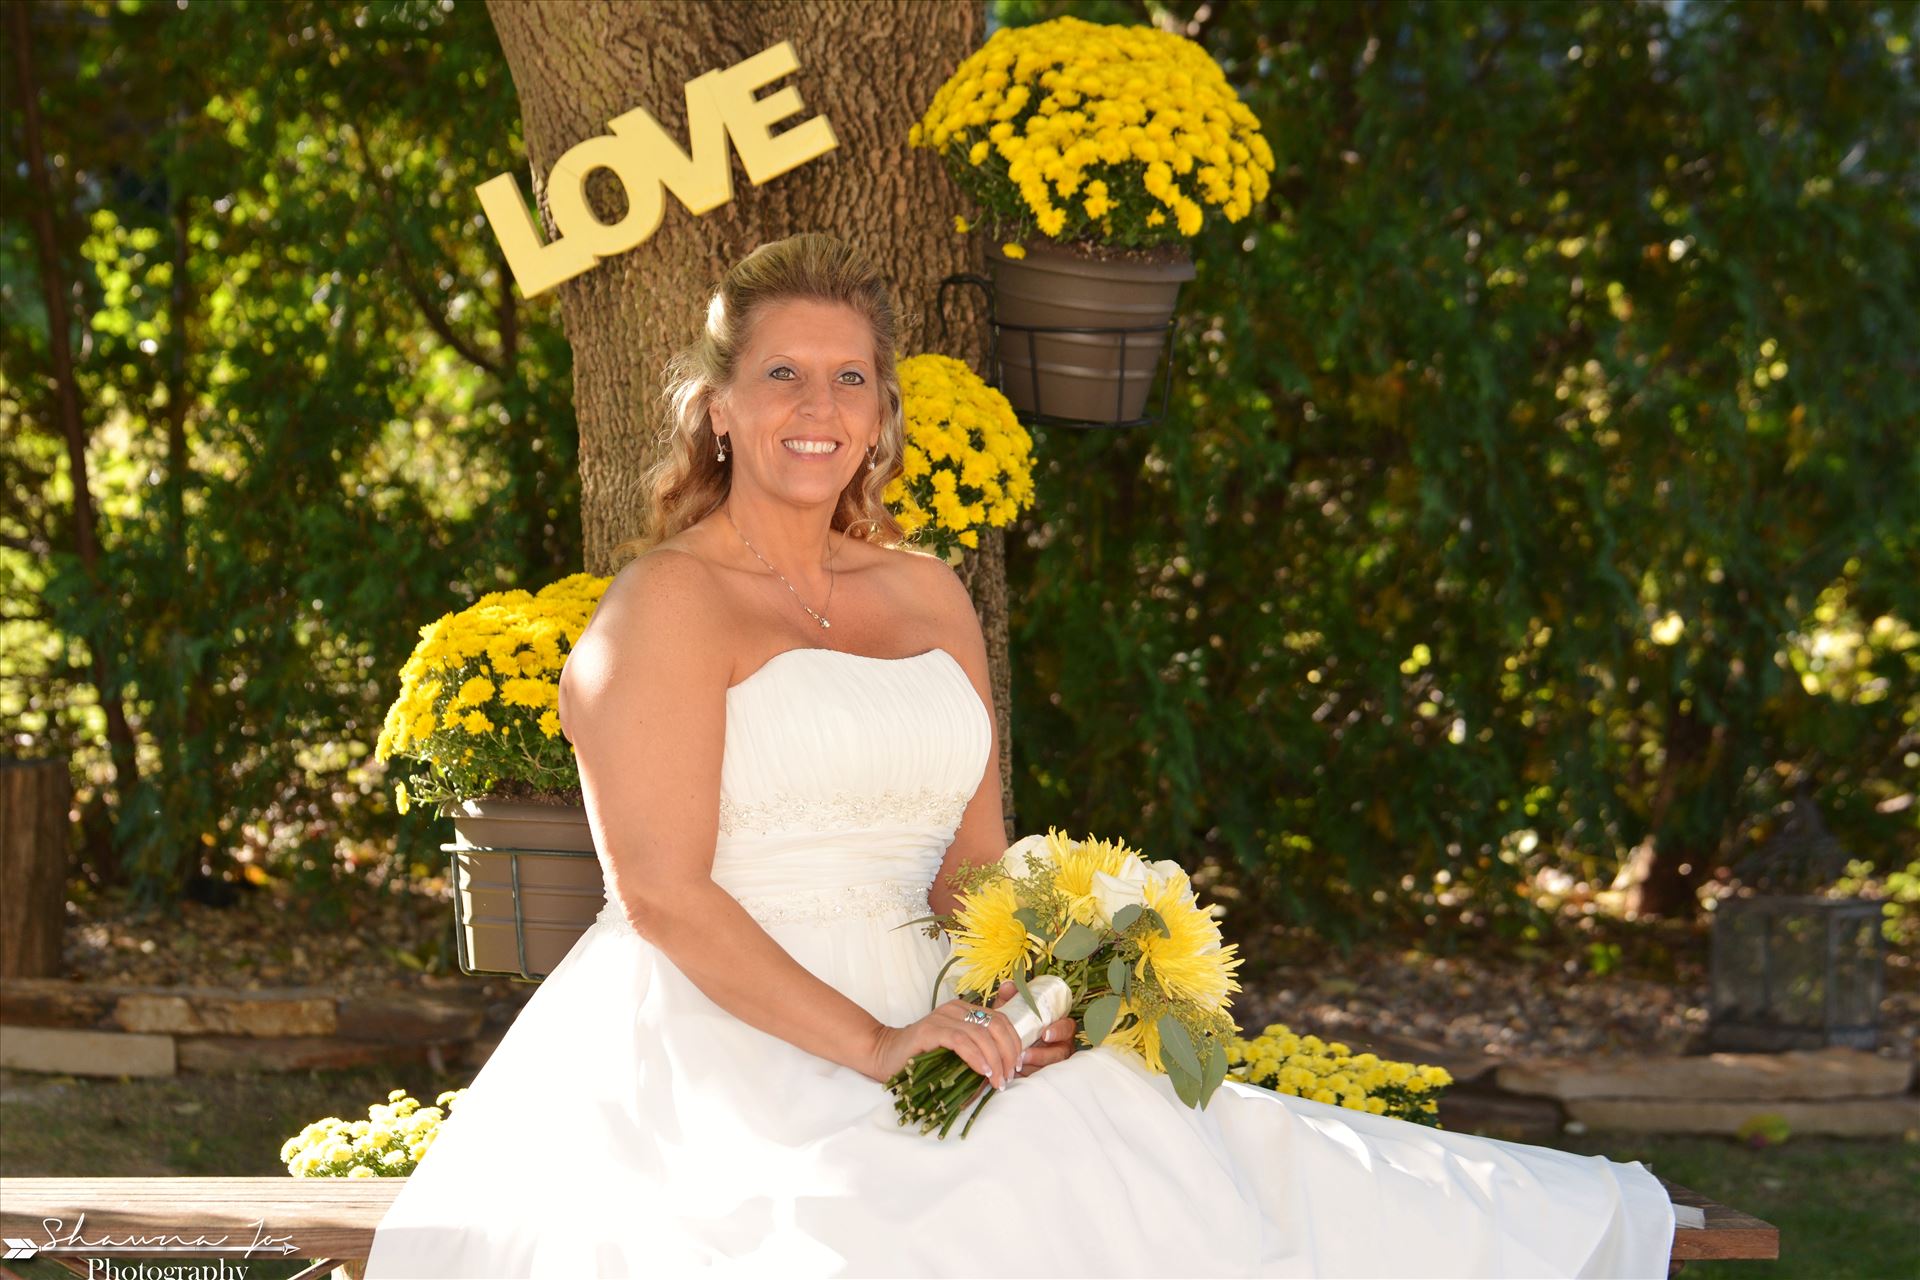 BucklesWedding5.jpg Gorgeous bride by Shawna Jo Photography